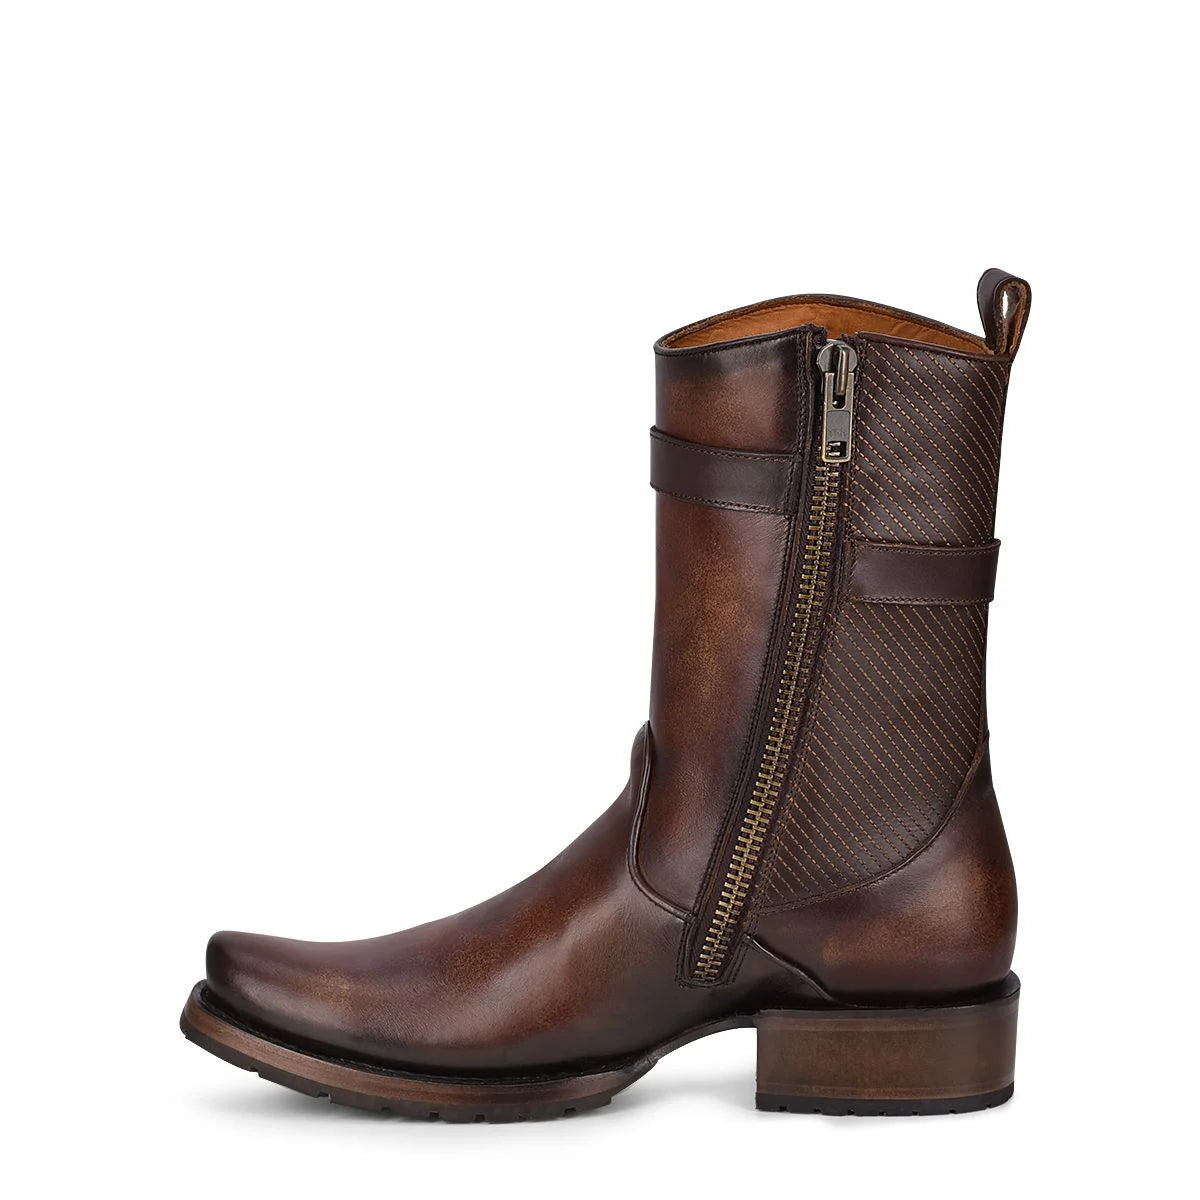 Men's Brown Urban Boots